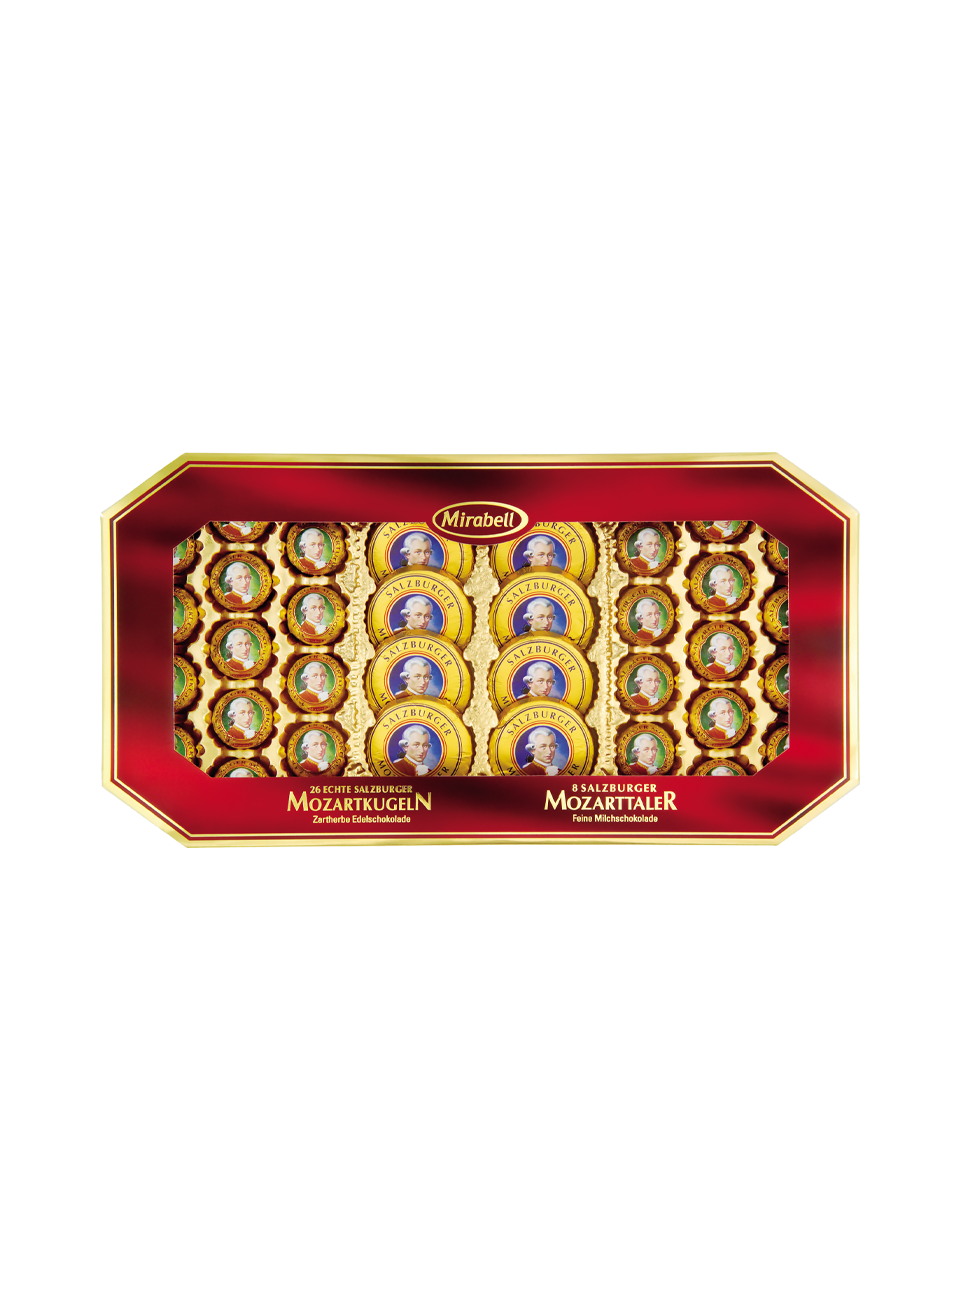 Mirabell mozart kugeln/taler конфеты шоколадные ассорти, п/у 600 гр.